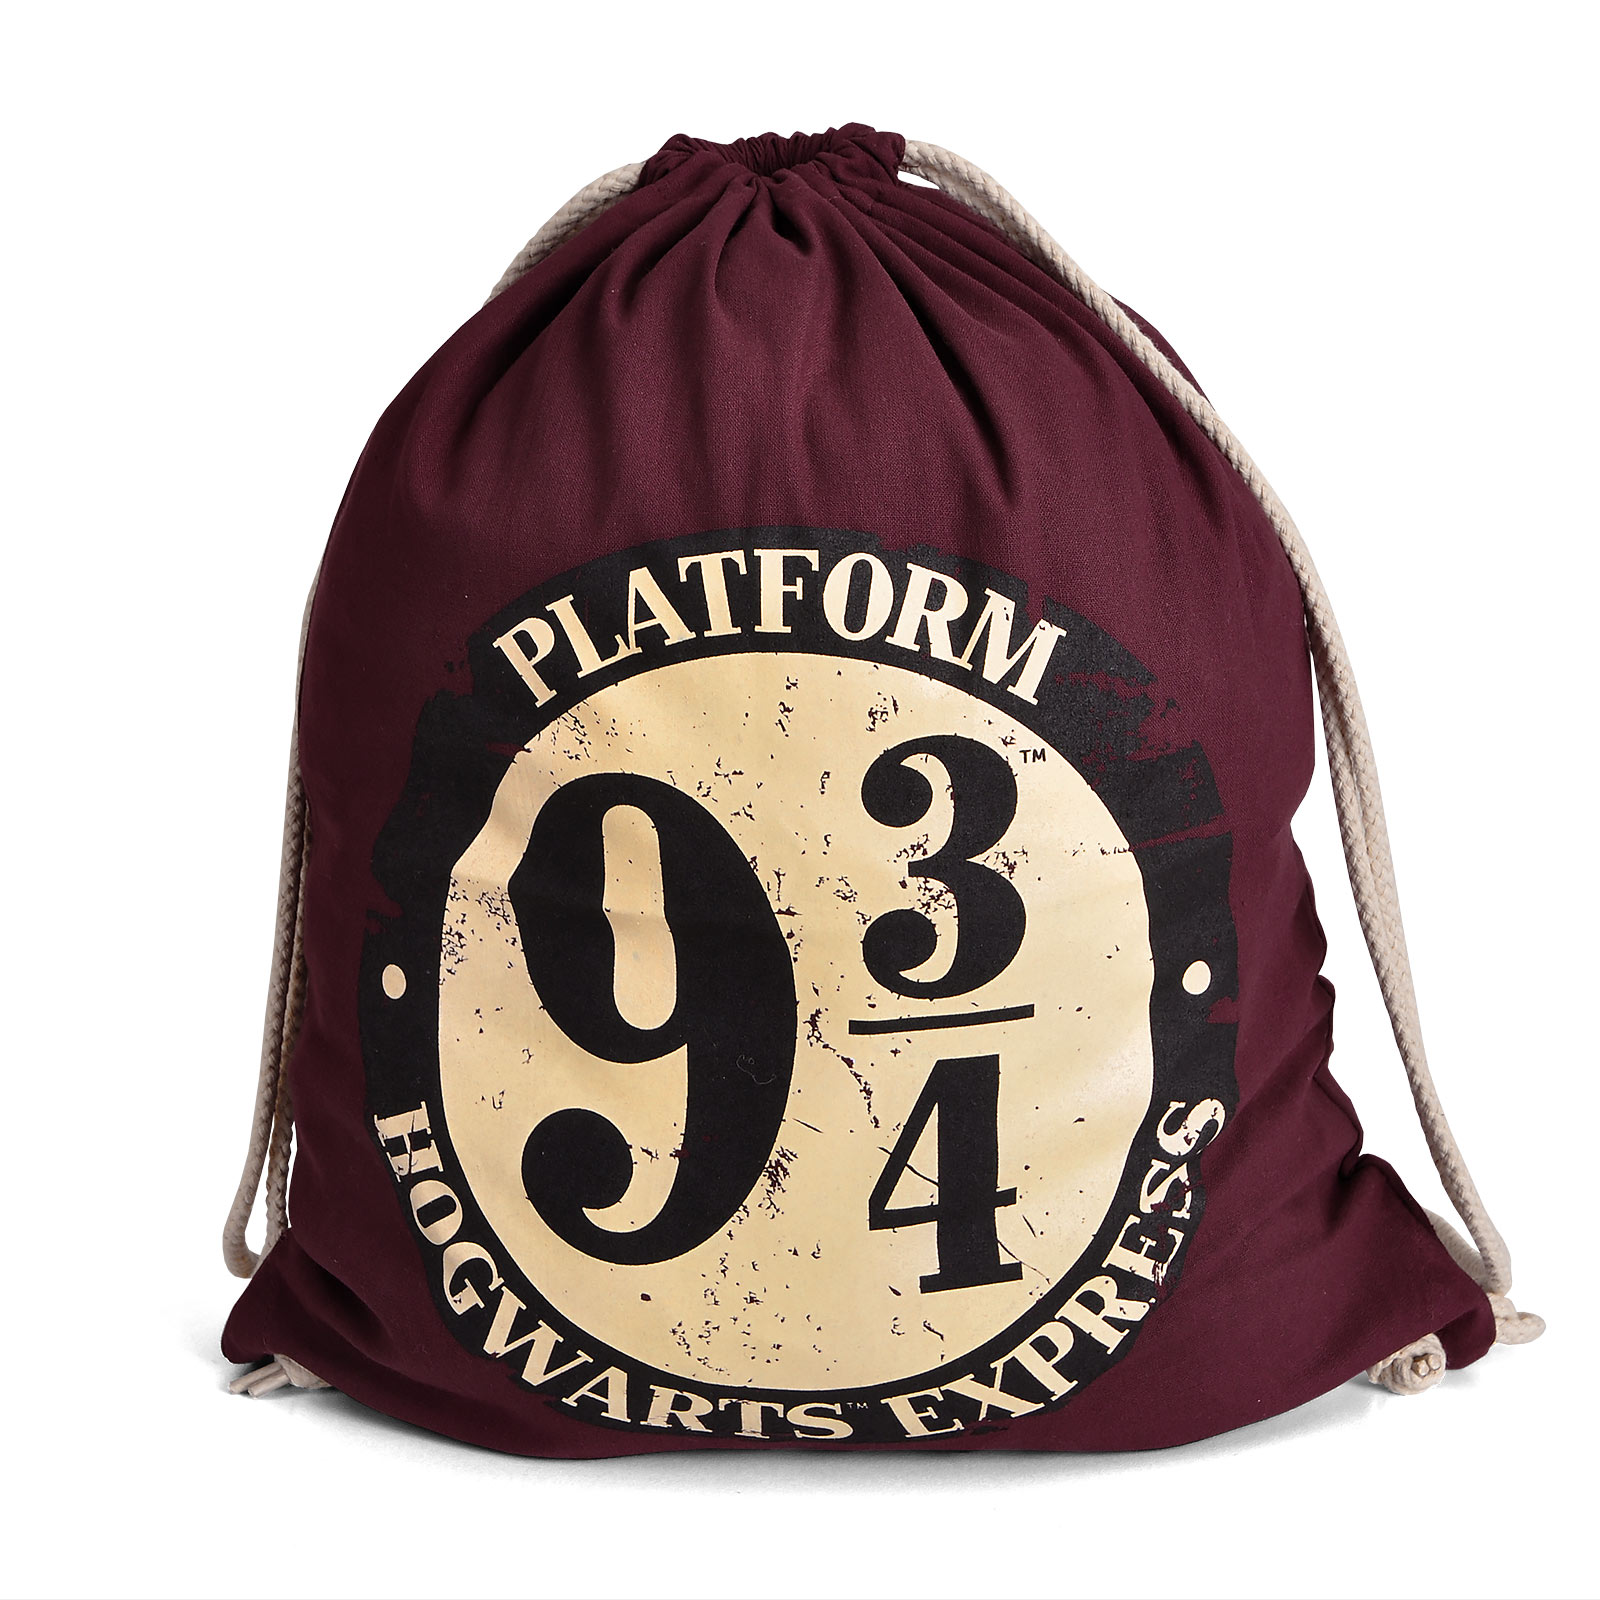 Harry Potter - 9 3/4 Hogwarts Express Sportbag